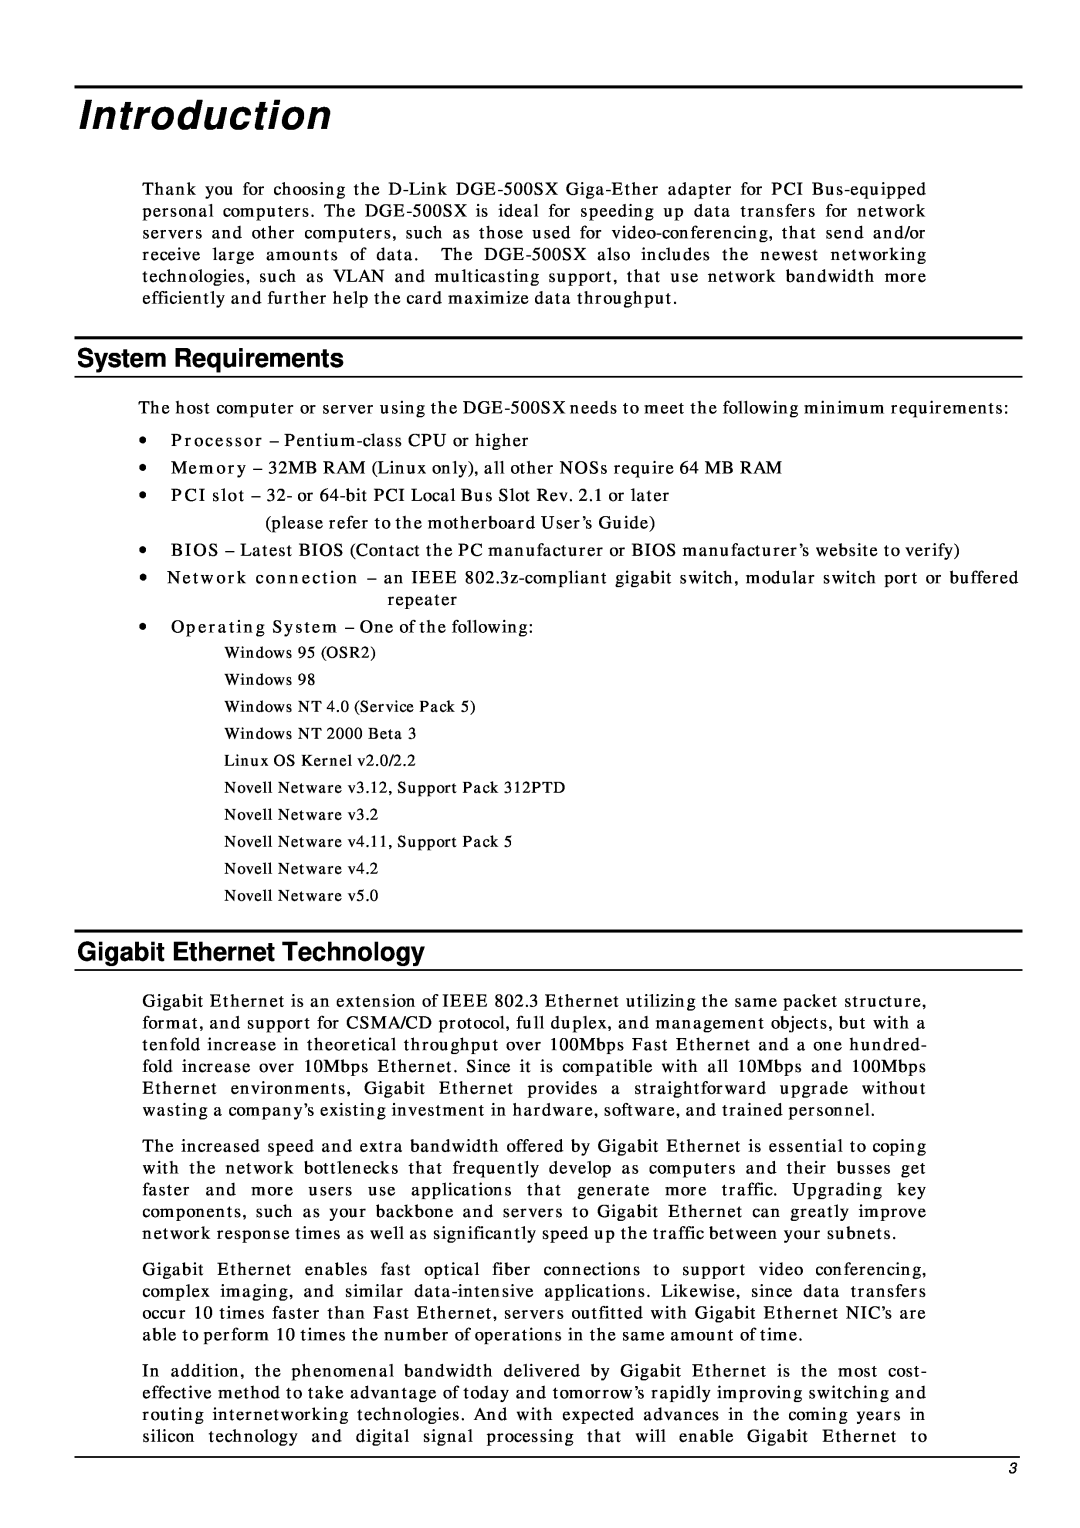 D-Link DGE-500SX manual Introduction, System Requirements, Gigabit Ethernet Technology 